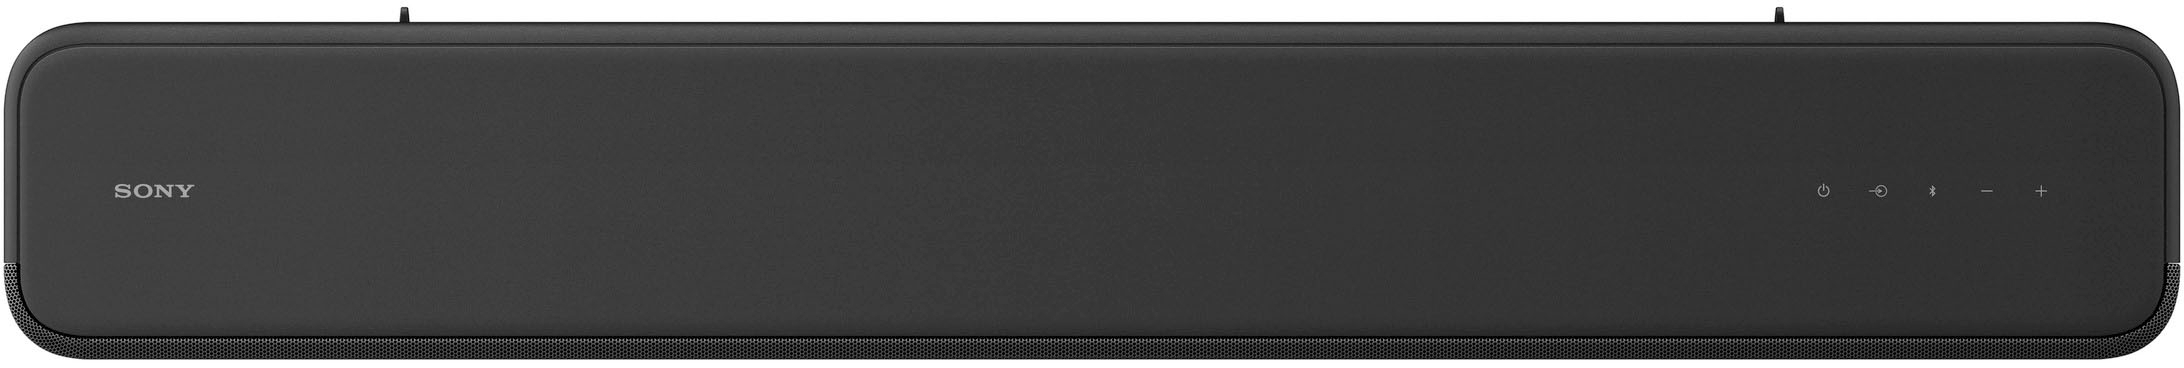 Sony HT-S2000 Compact 3.1ch HTS2000 Atmos Dolby Soundbar Buy - Best Black